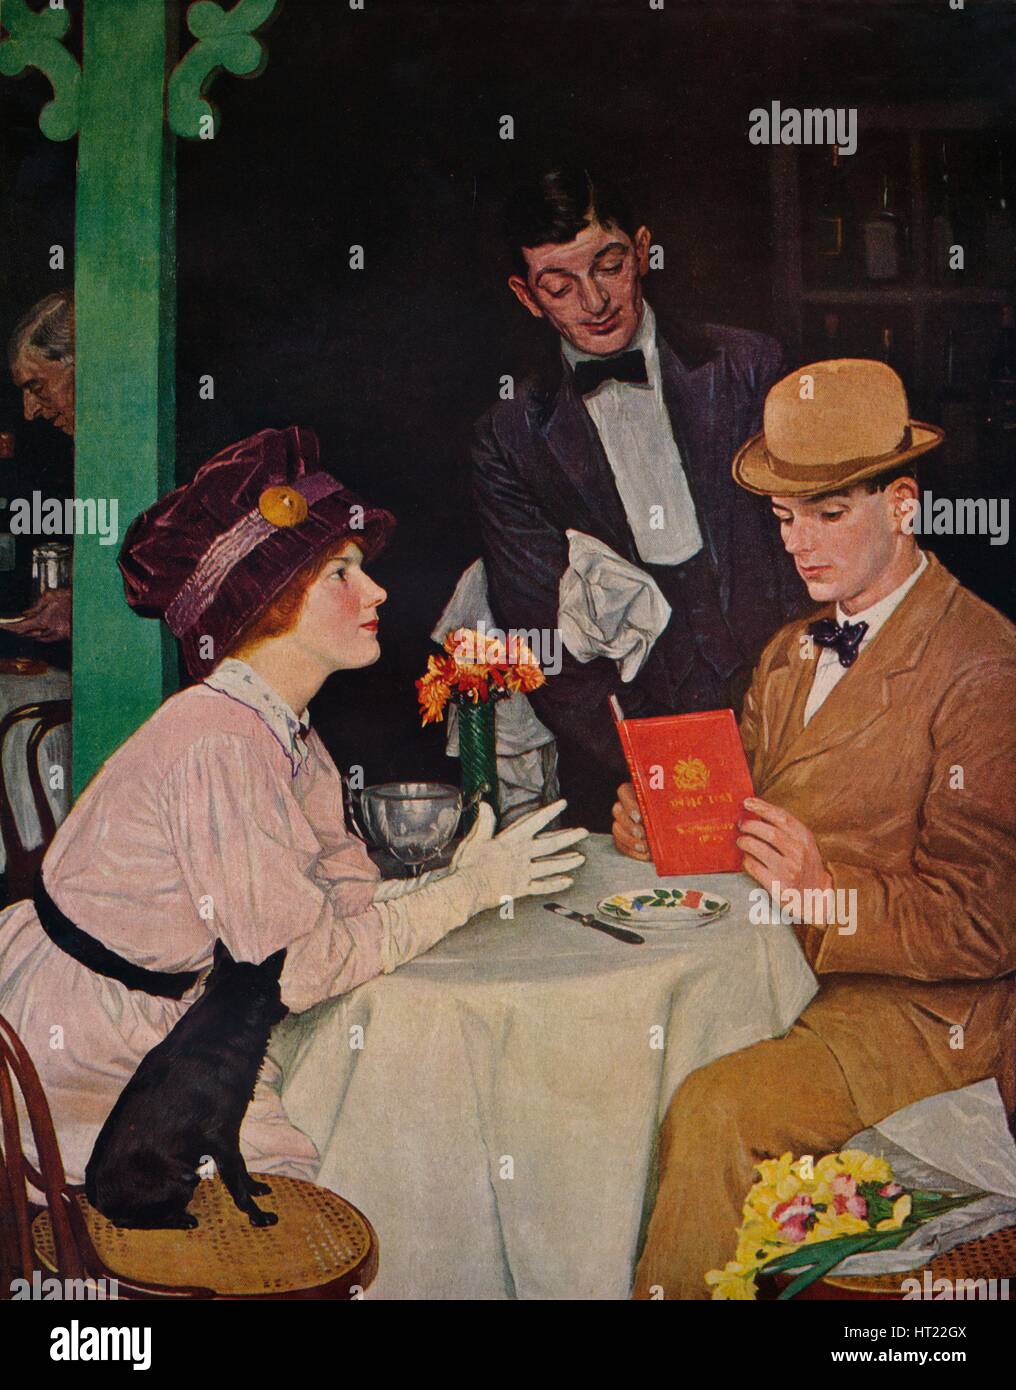 'Bank Holiday', 1912 (1935). Artist: William Strang. Stock Photo